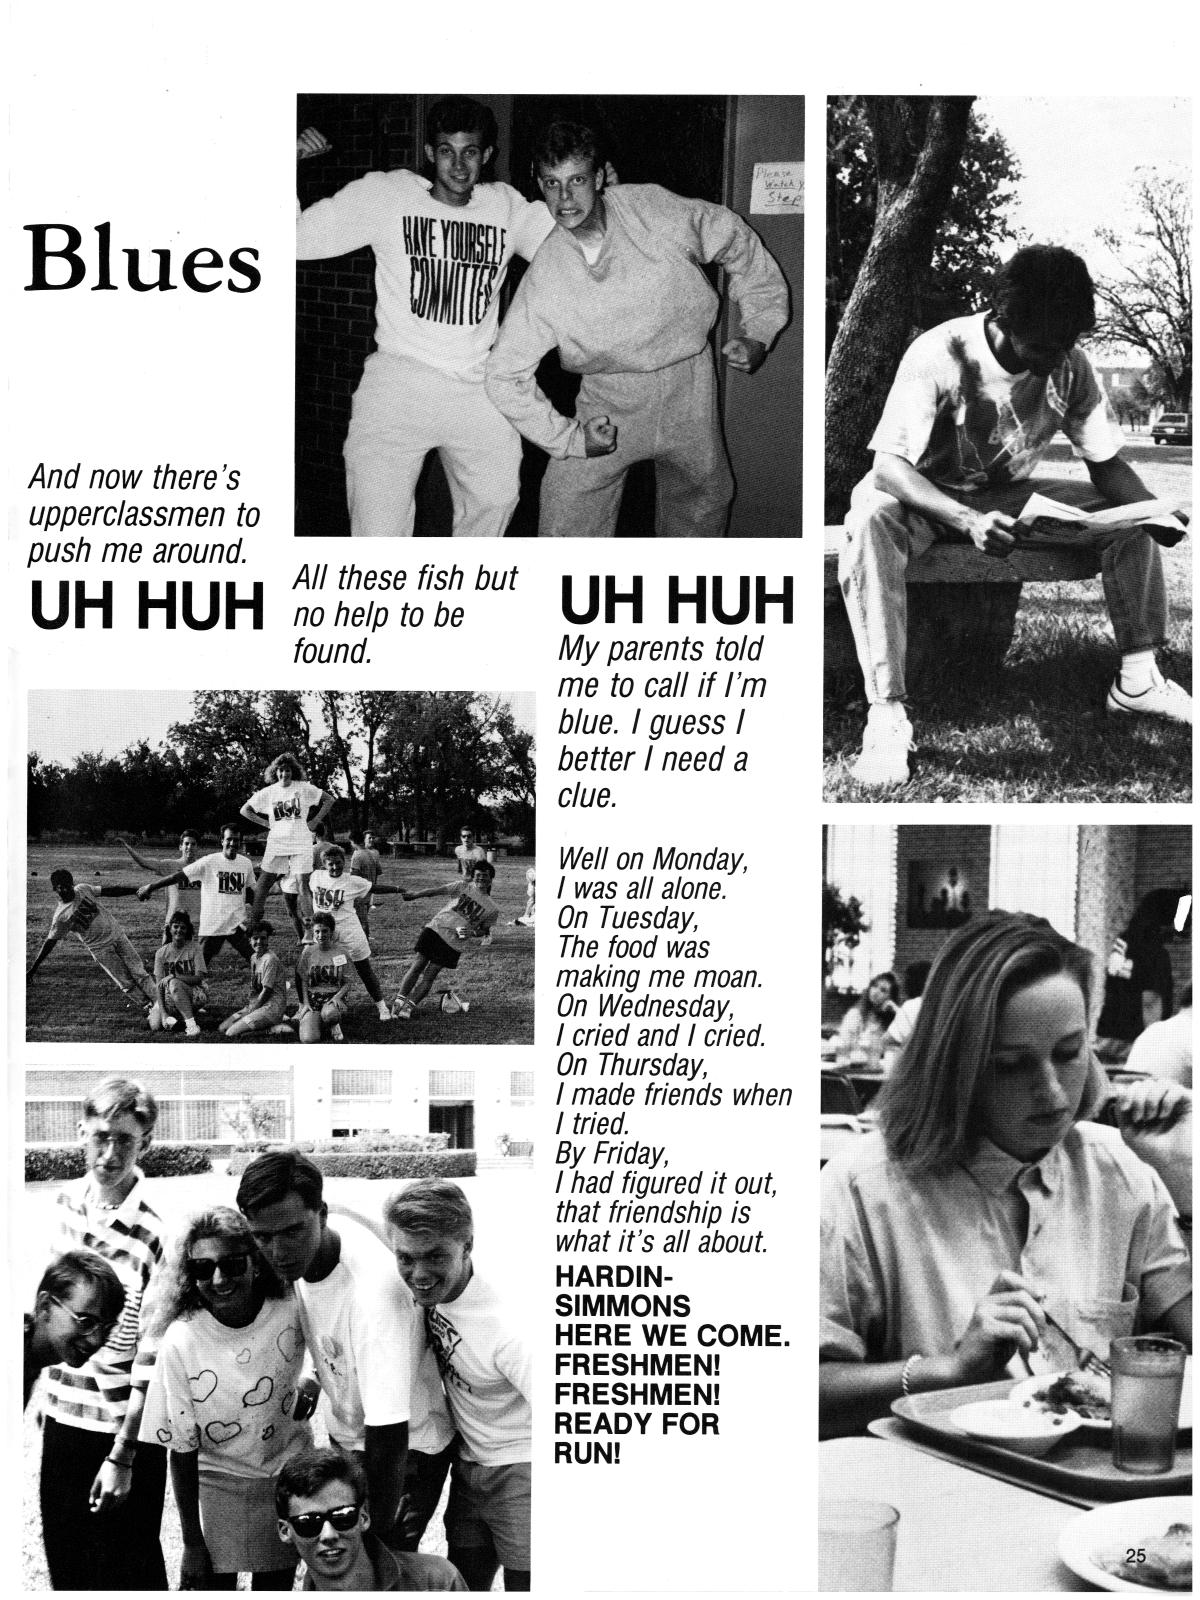 The Bronco, Yearbook of Hardin-Simmons University, 1989
                                                
                                                    25
                                                